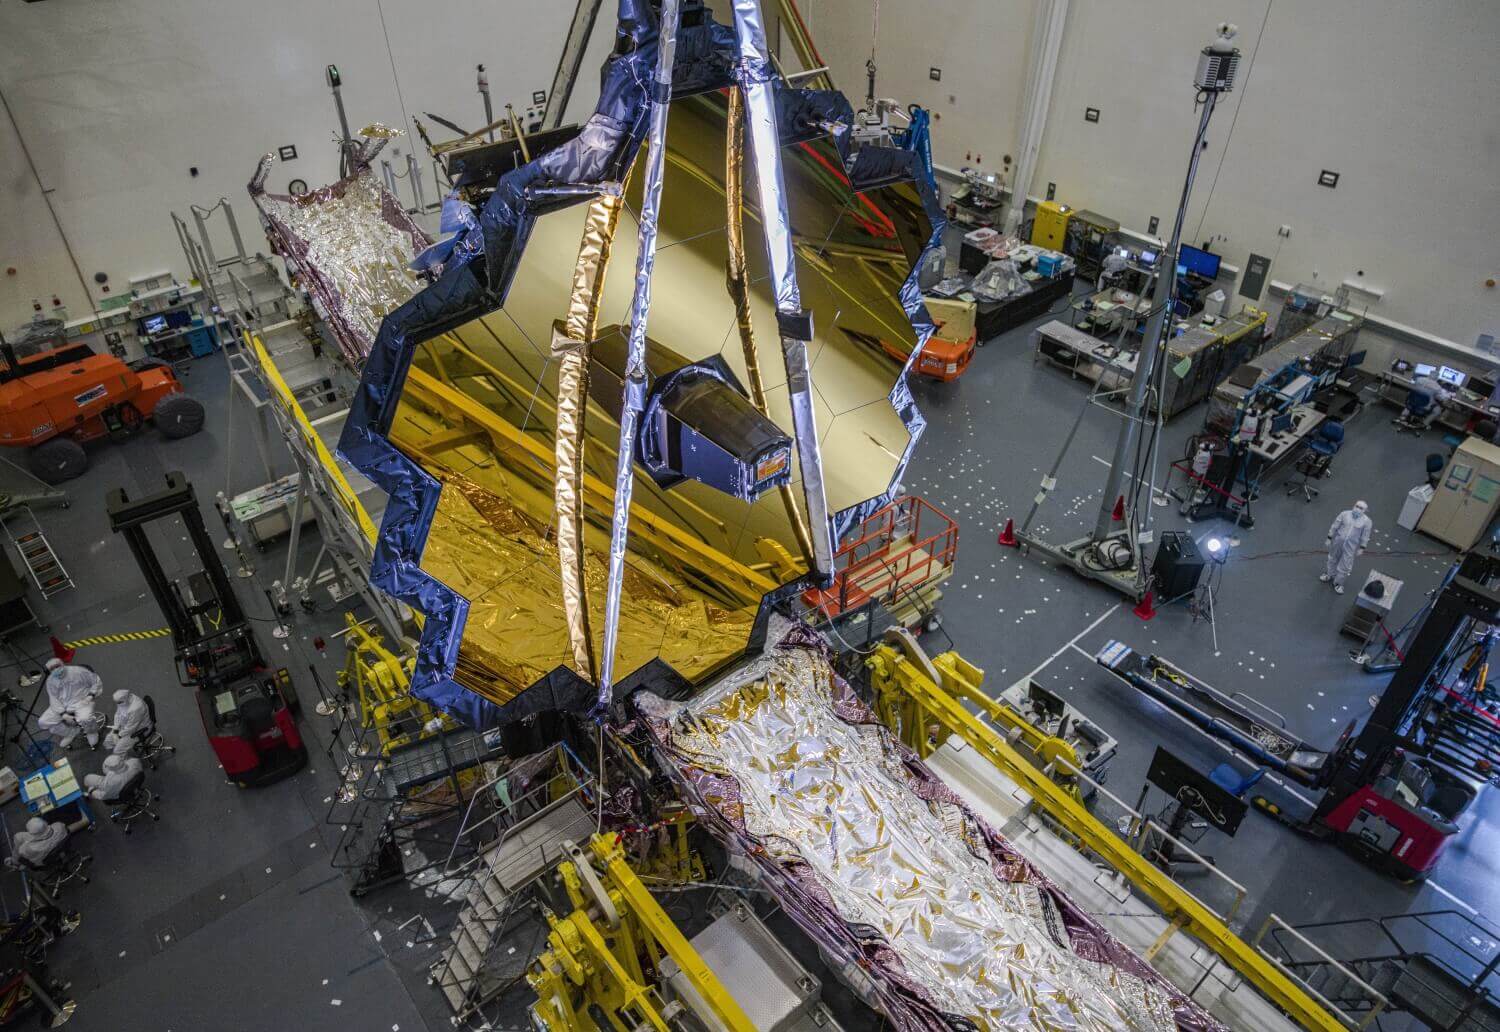 NASA reschedules James Webb Space Telescope launch for October 2021